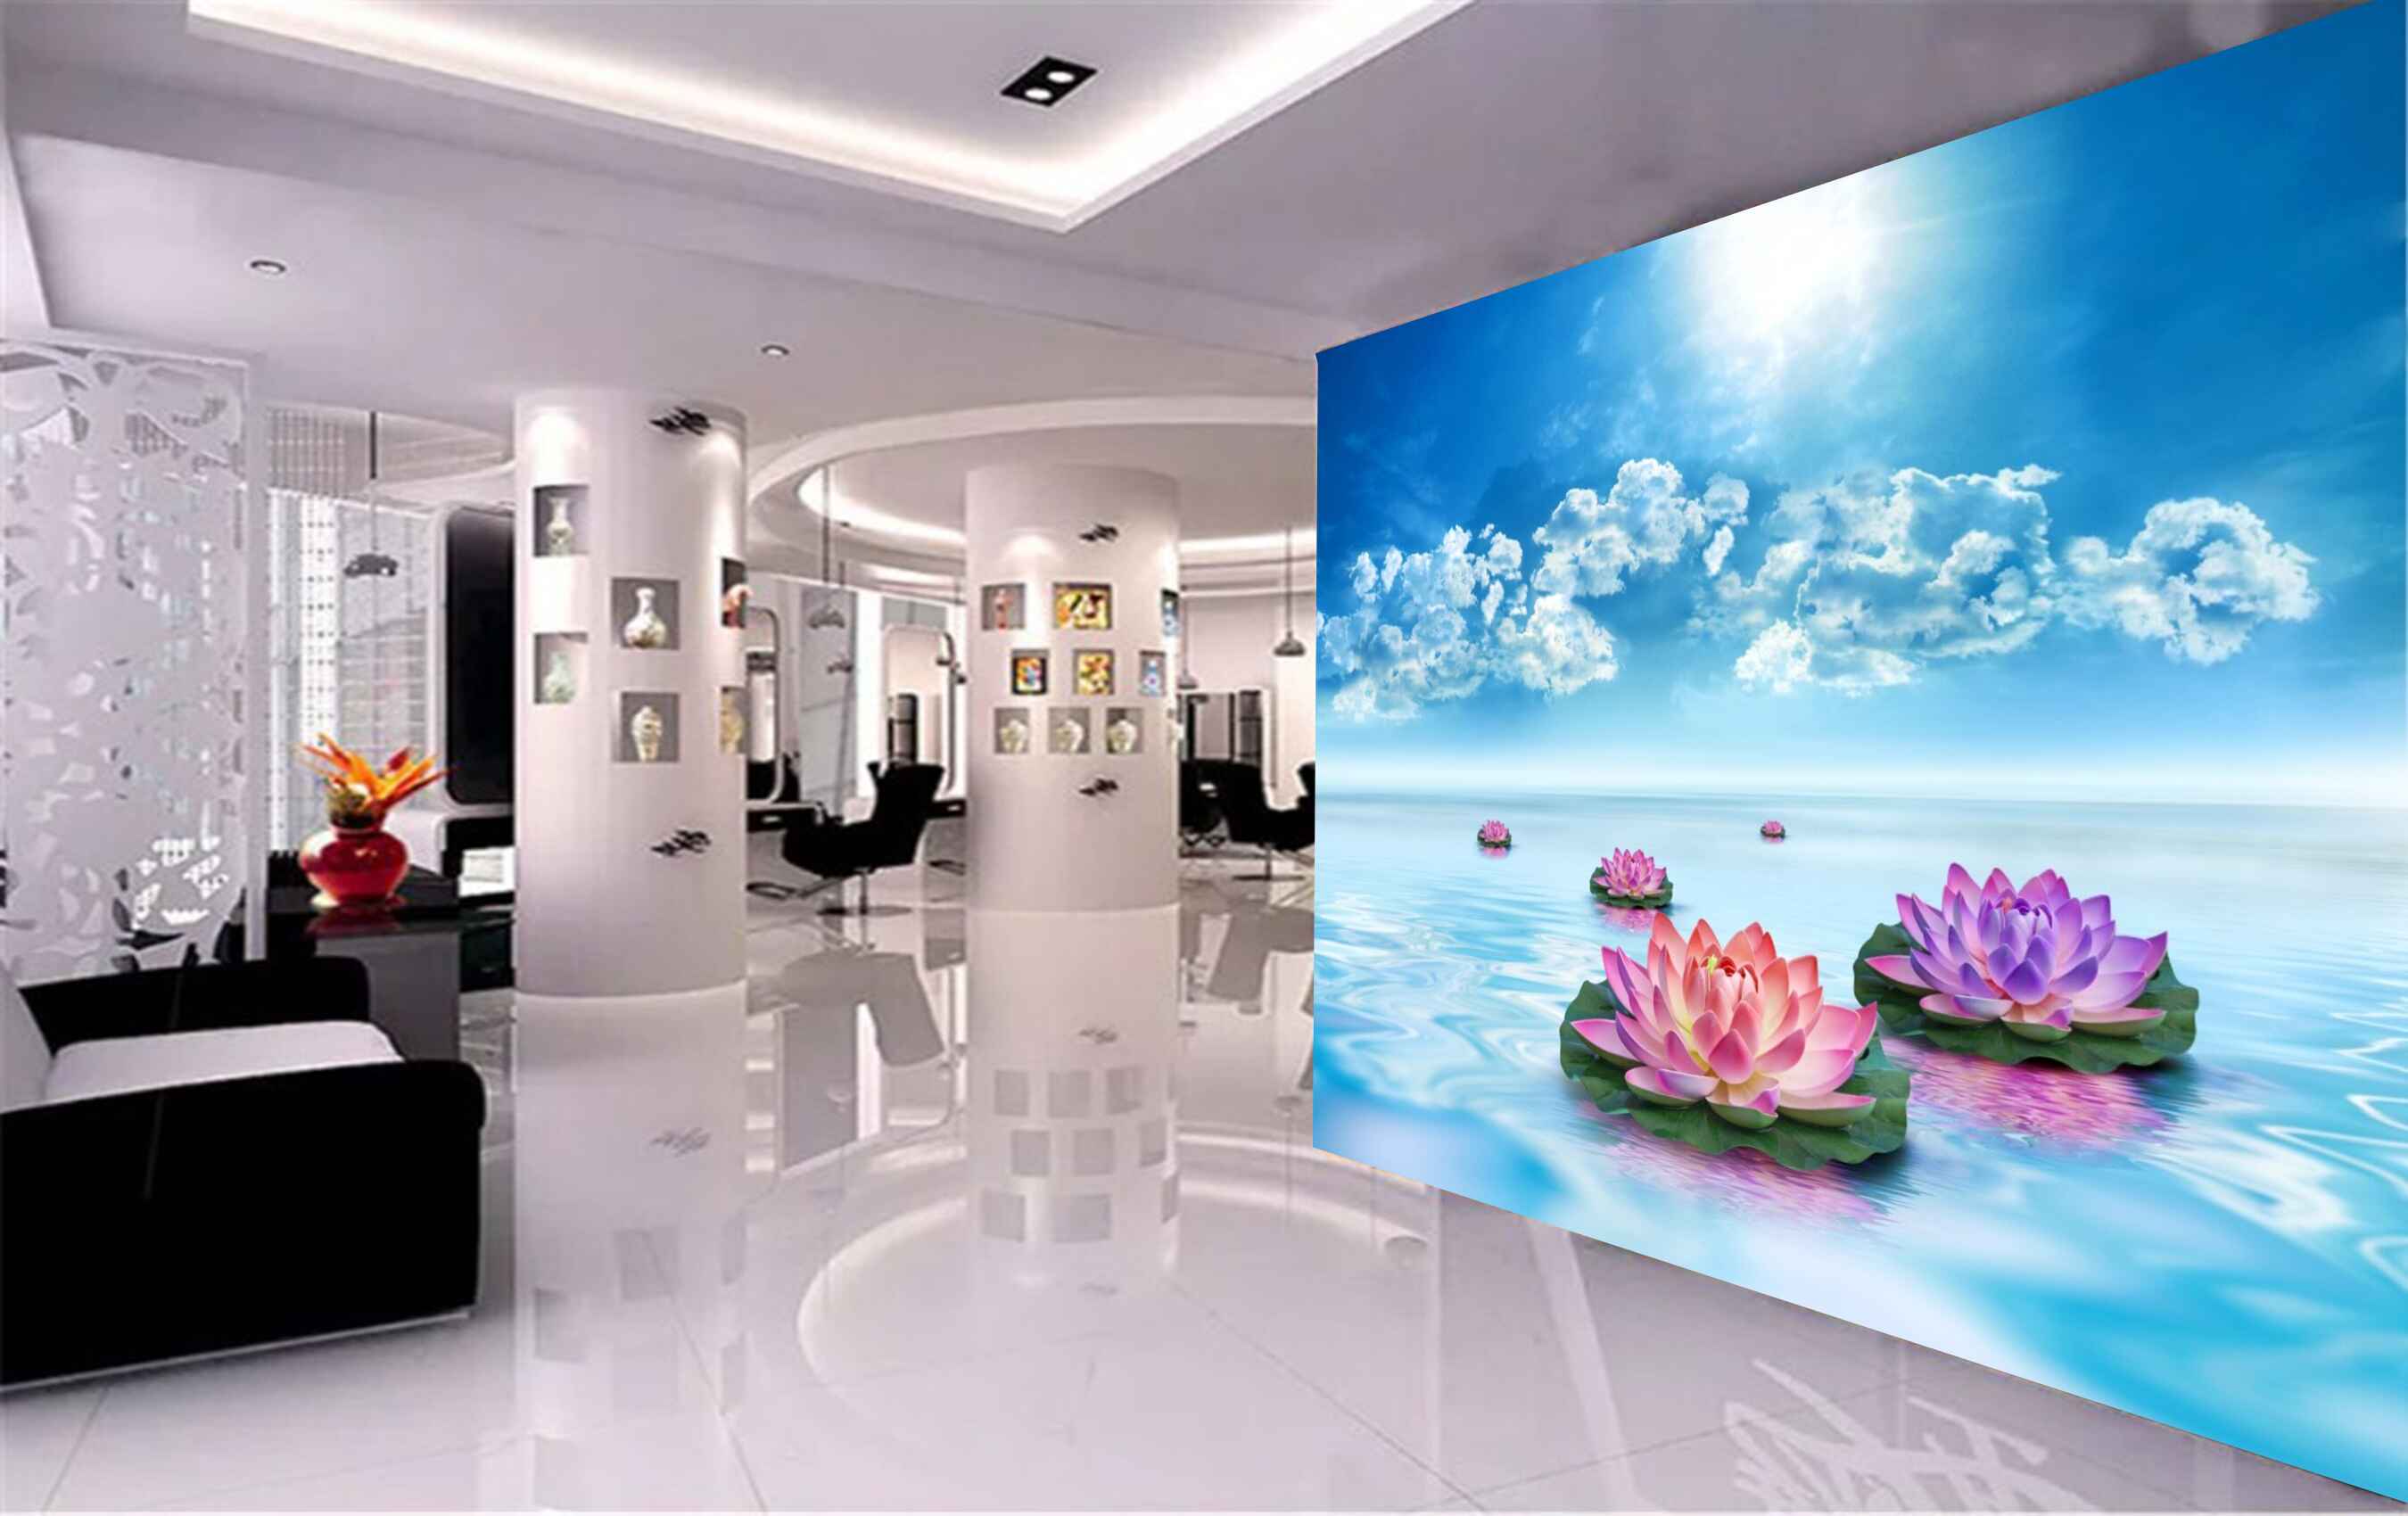 Avikalp MWZ3765 Pink Purple Lotus Flowers Sea Clouds HD Wallpaper for Spa